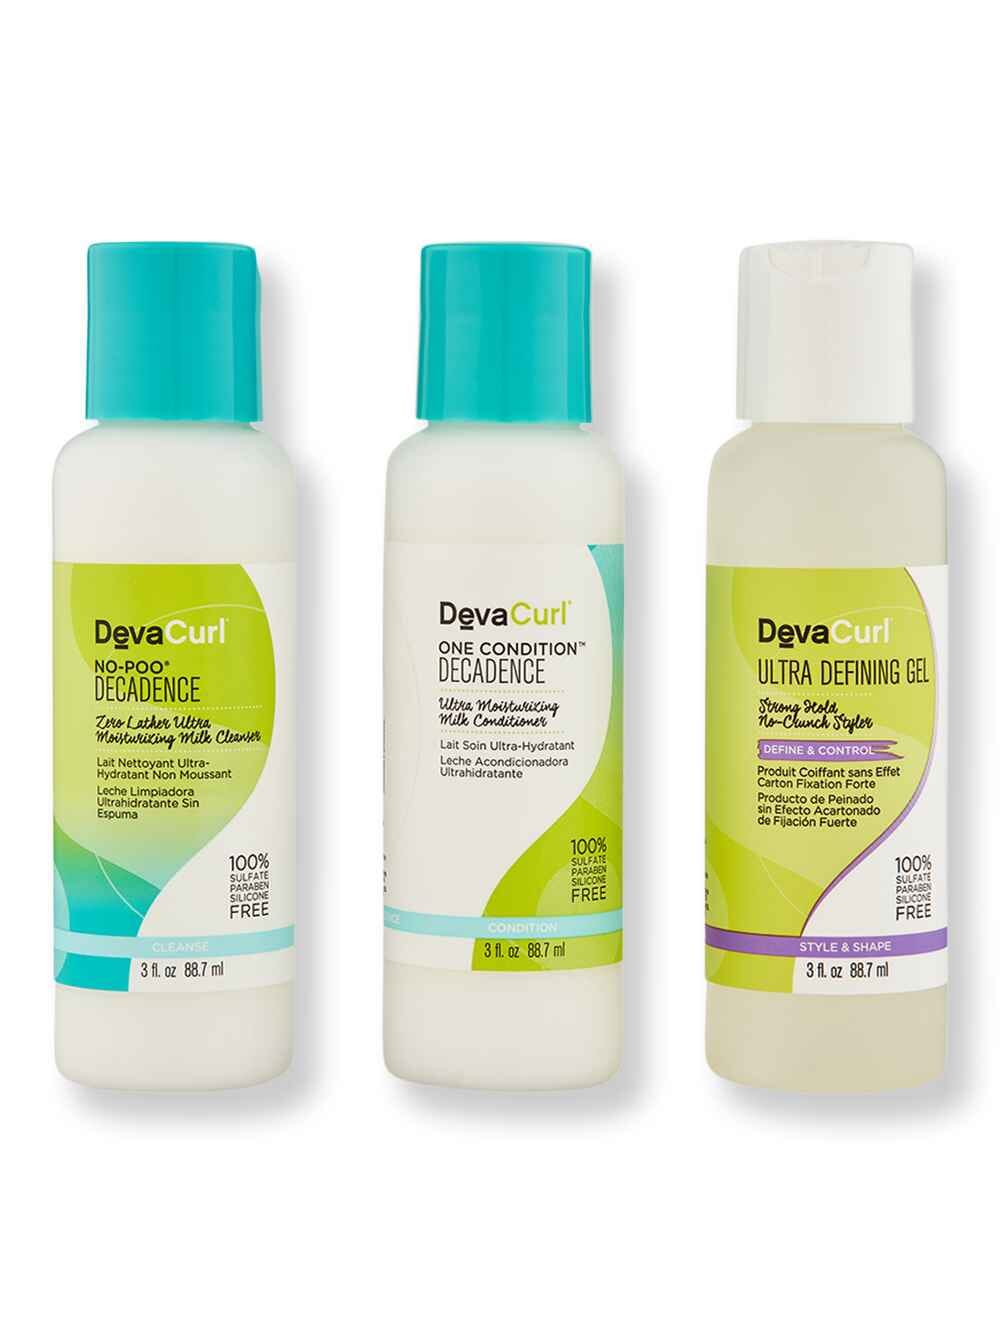 DevaCurl DevaCurl No-Poo Decadence 3 oz & One Condition Decadence 3 oz & Ultra Defining Gel 3 oz Hair Care Value Sets 